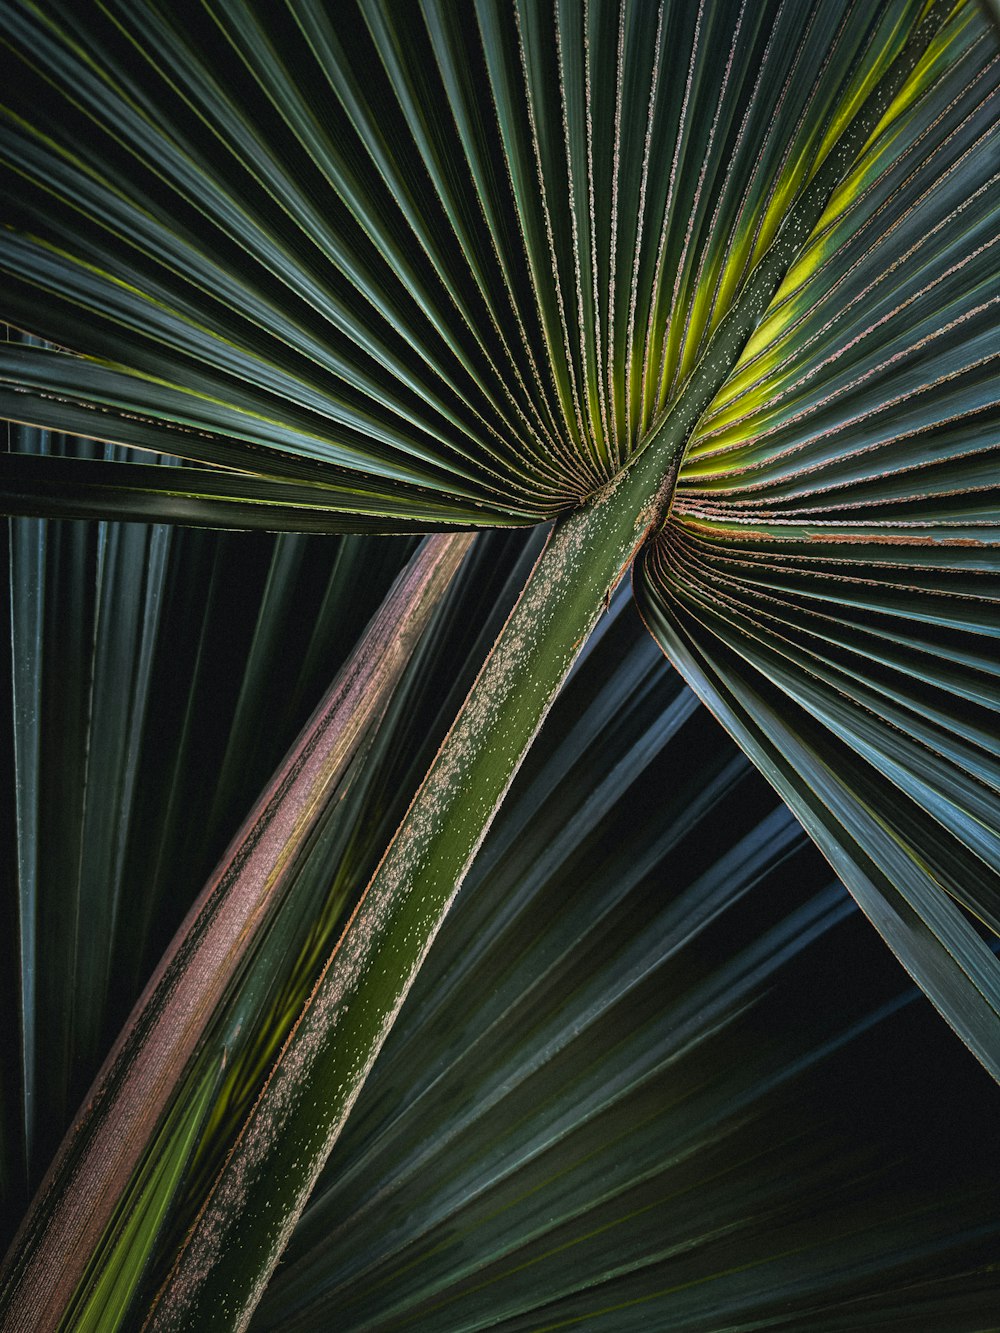 Una vista de cerca de una hoja de palma